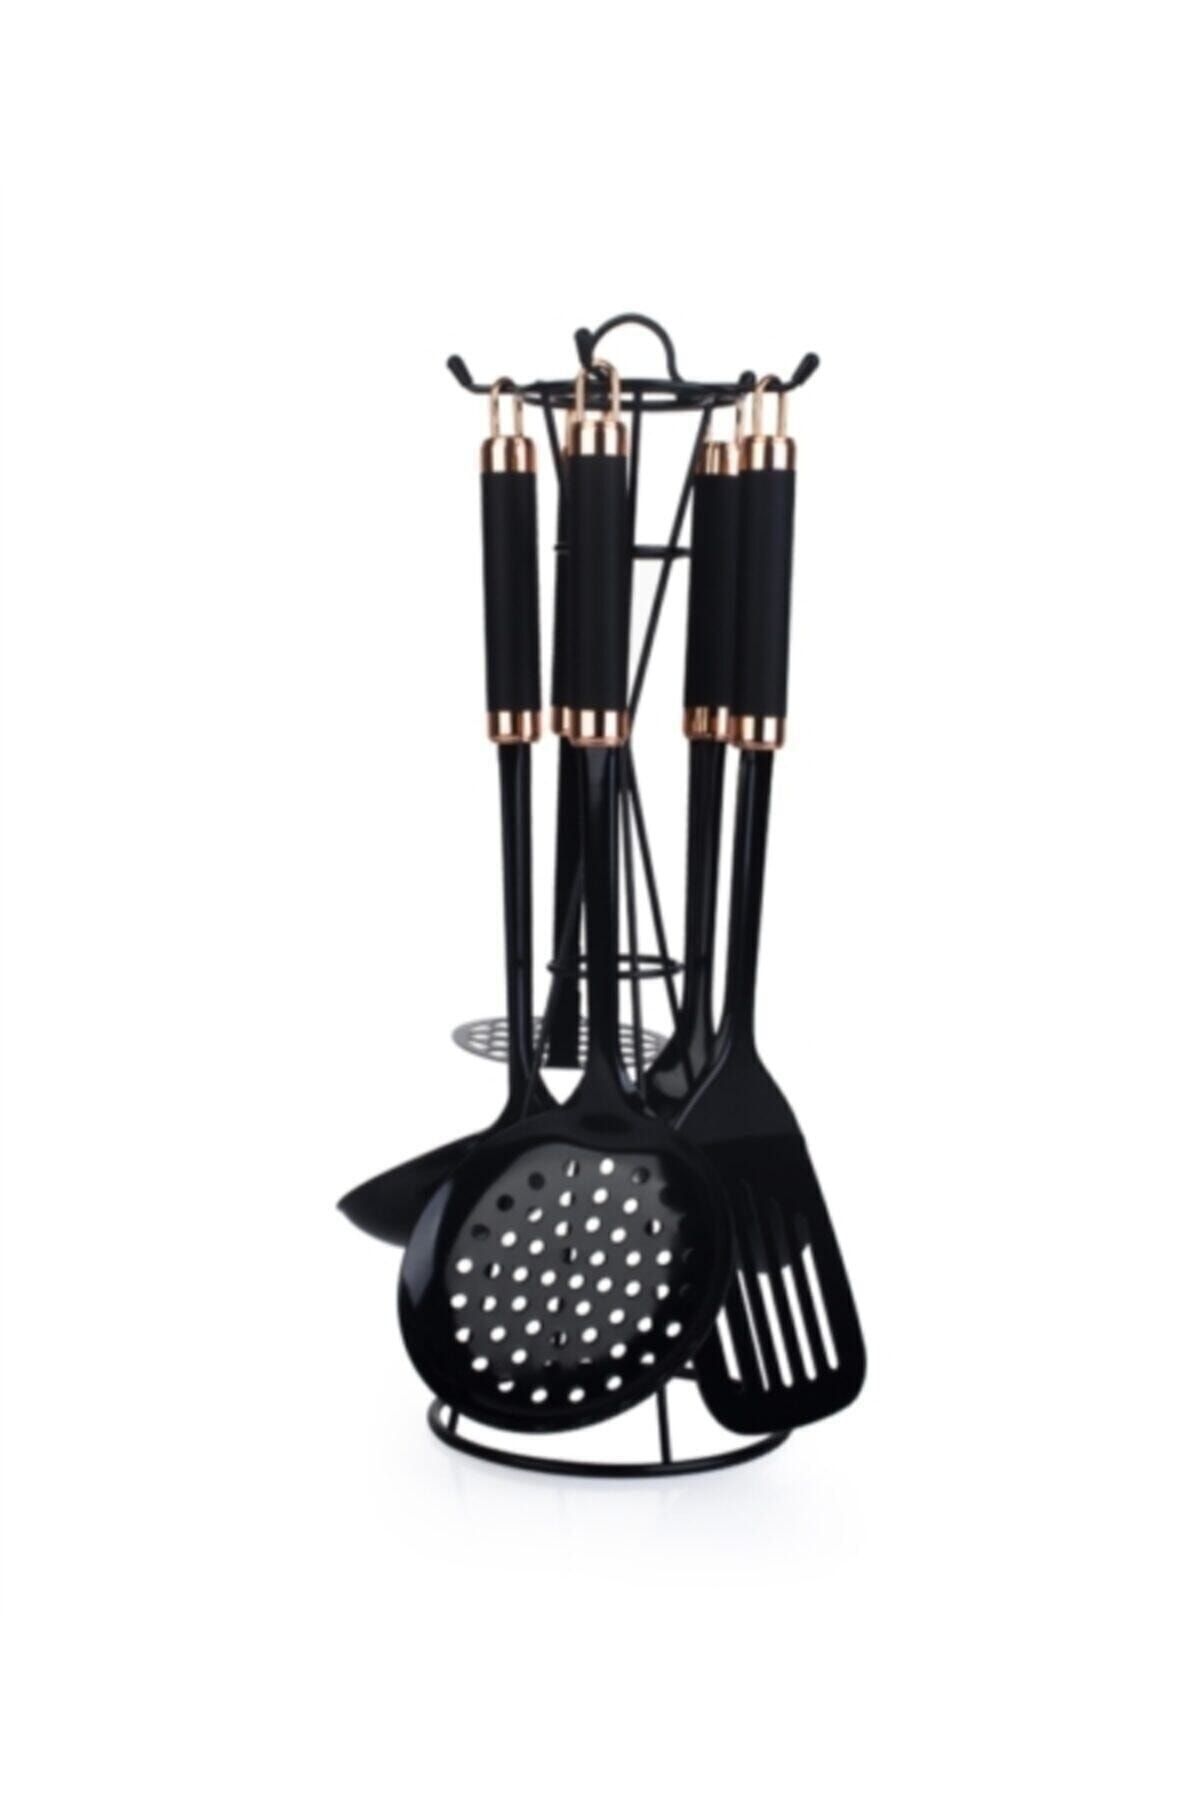 ACAR Perlino 5'li Metal Standlı Mutfak Set Siyah Byk-009899